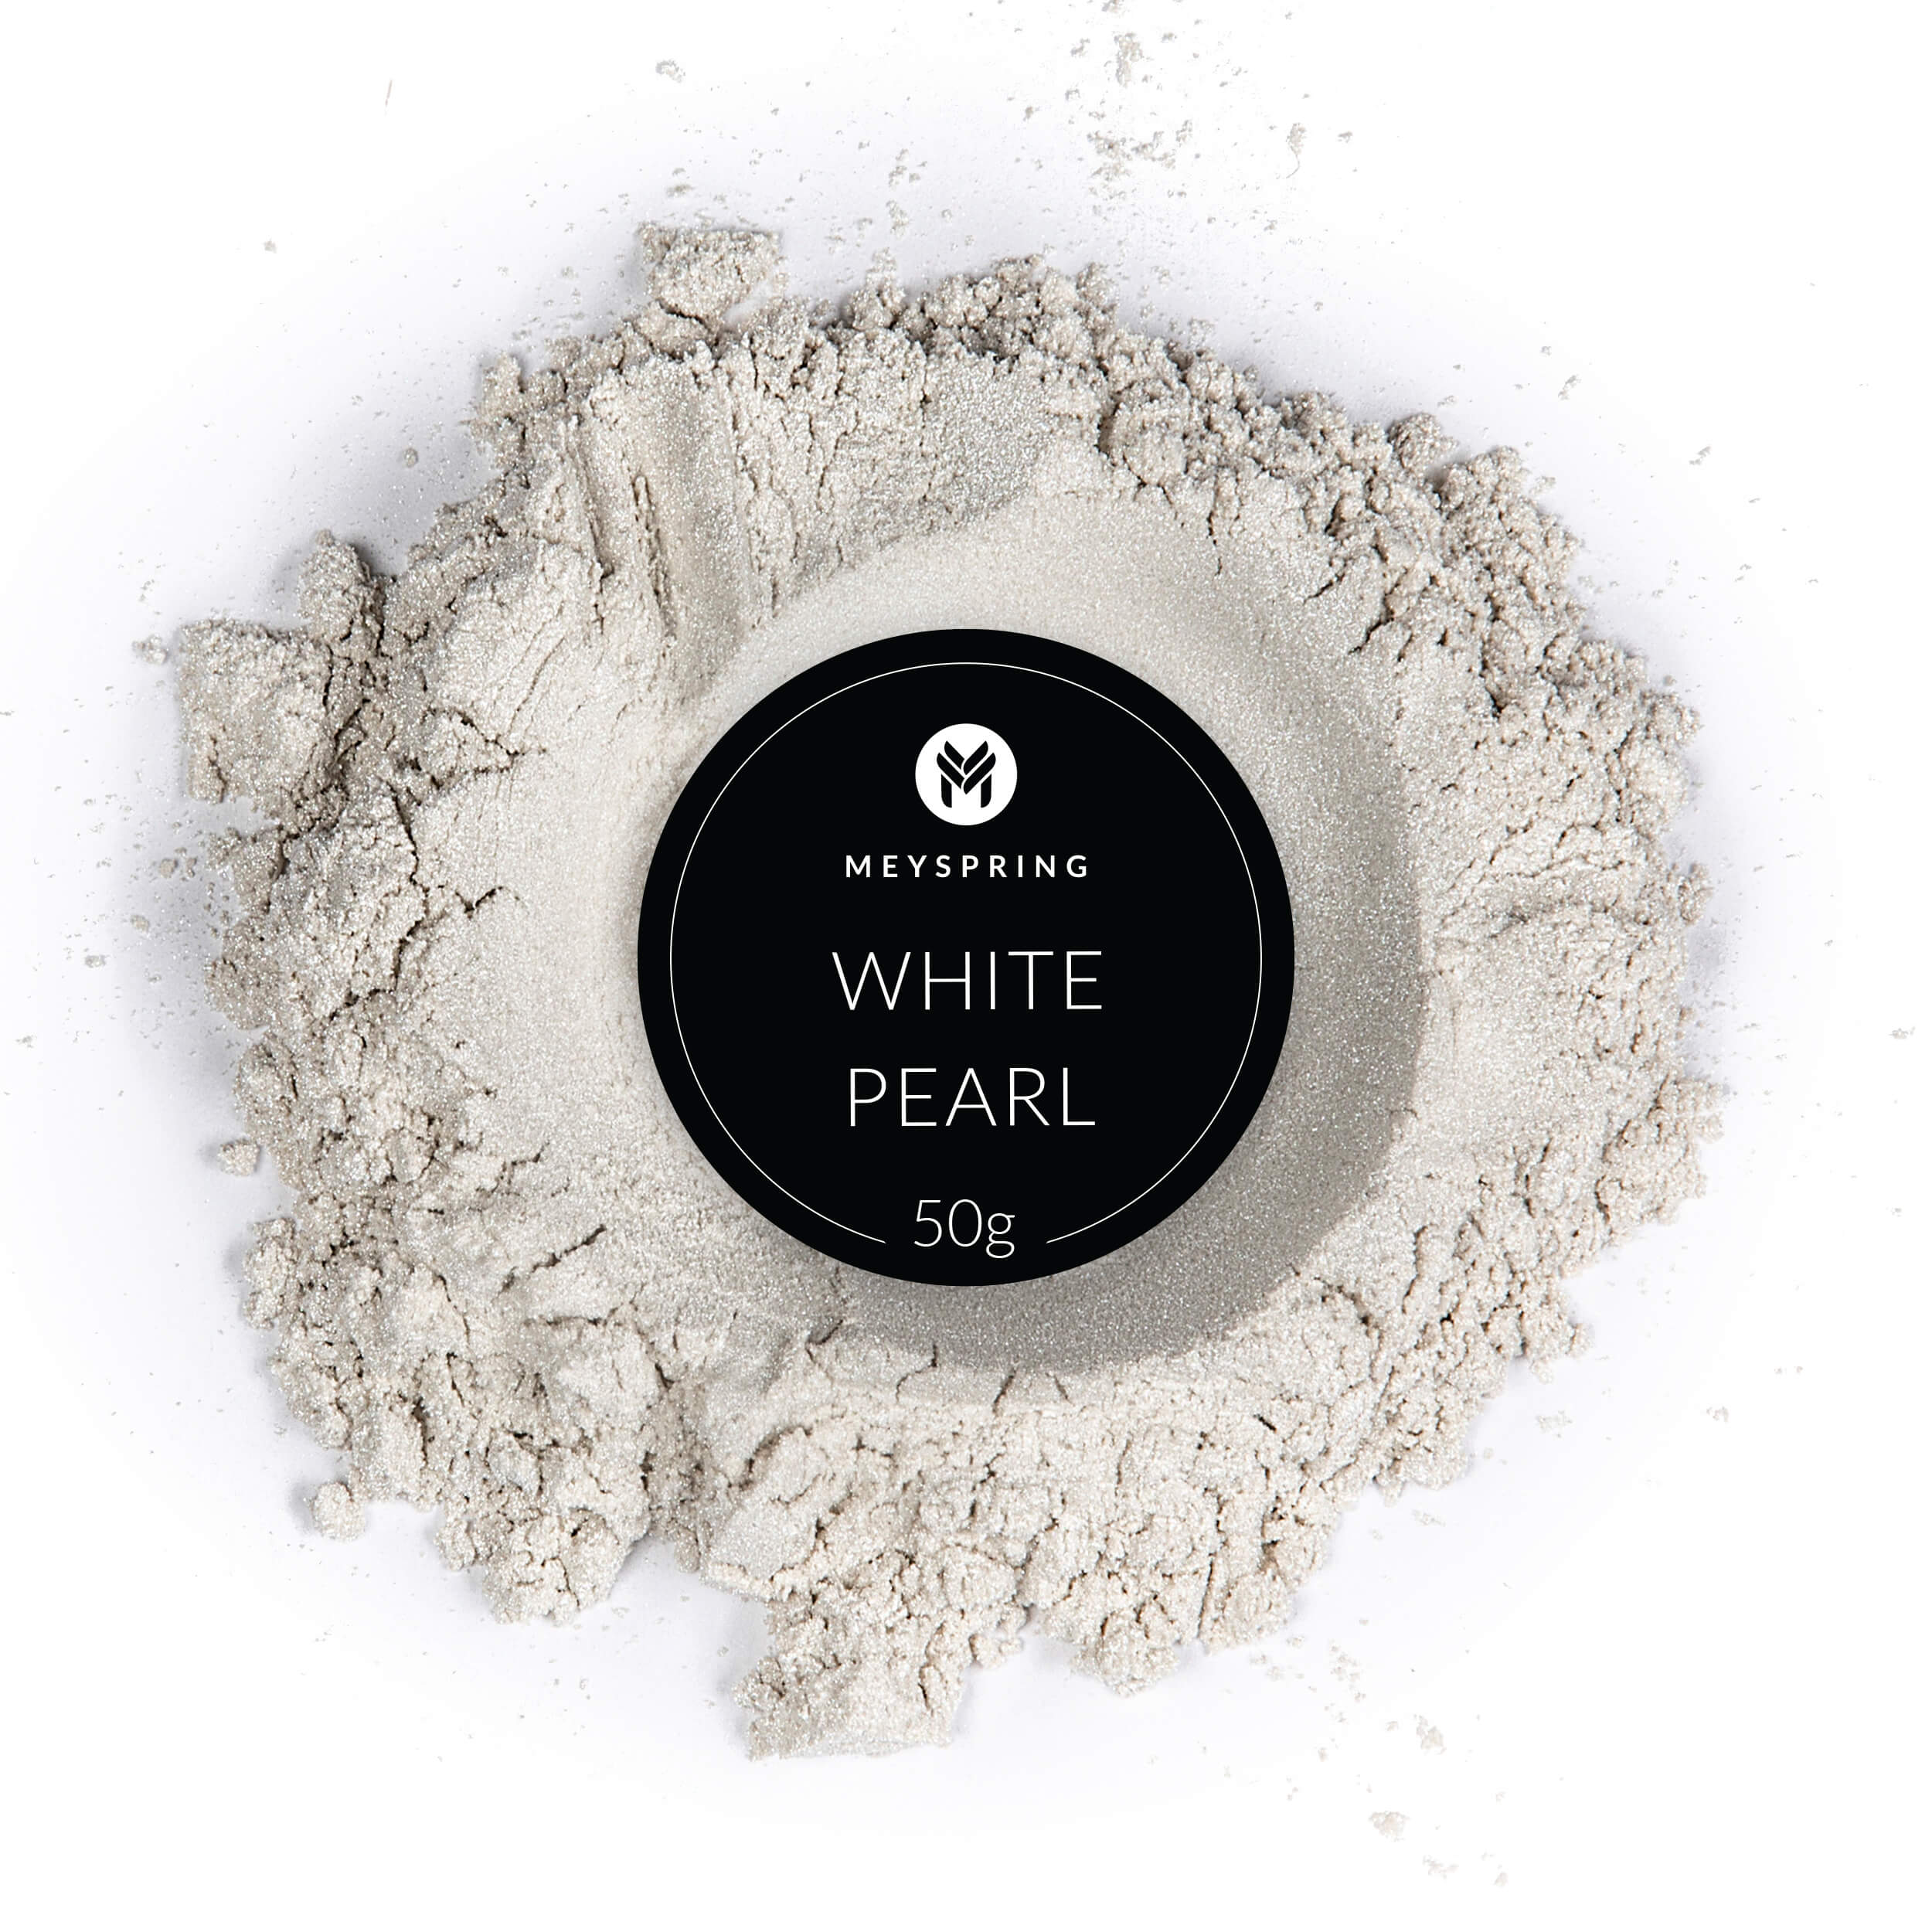 MEYSPRING White Pearl Mica Powder - 50g - White Resin Pigment - White Mica Powder for Epoxy Resin Art - White Epoxy Pigment and UV Resin Dye - Mica